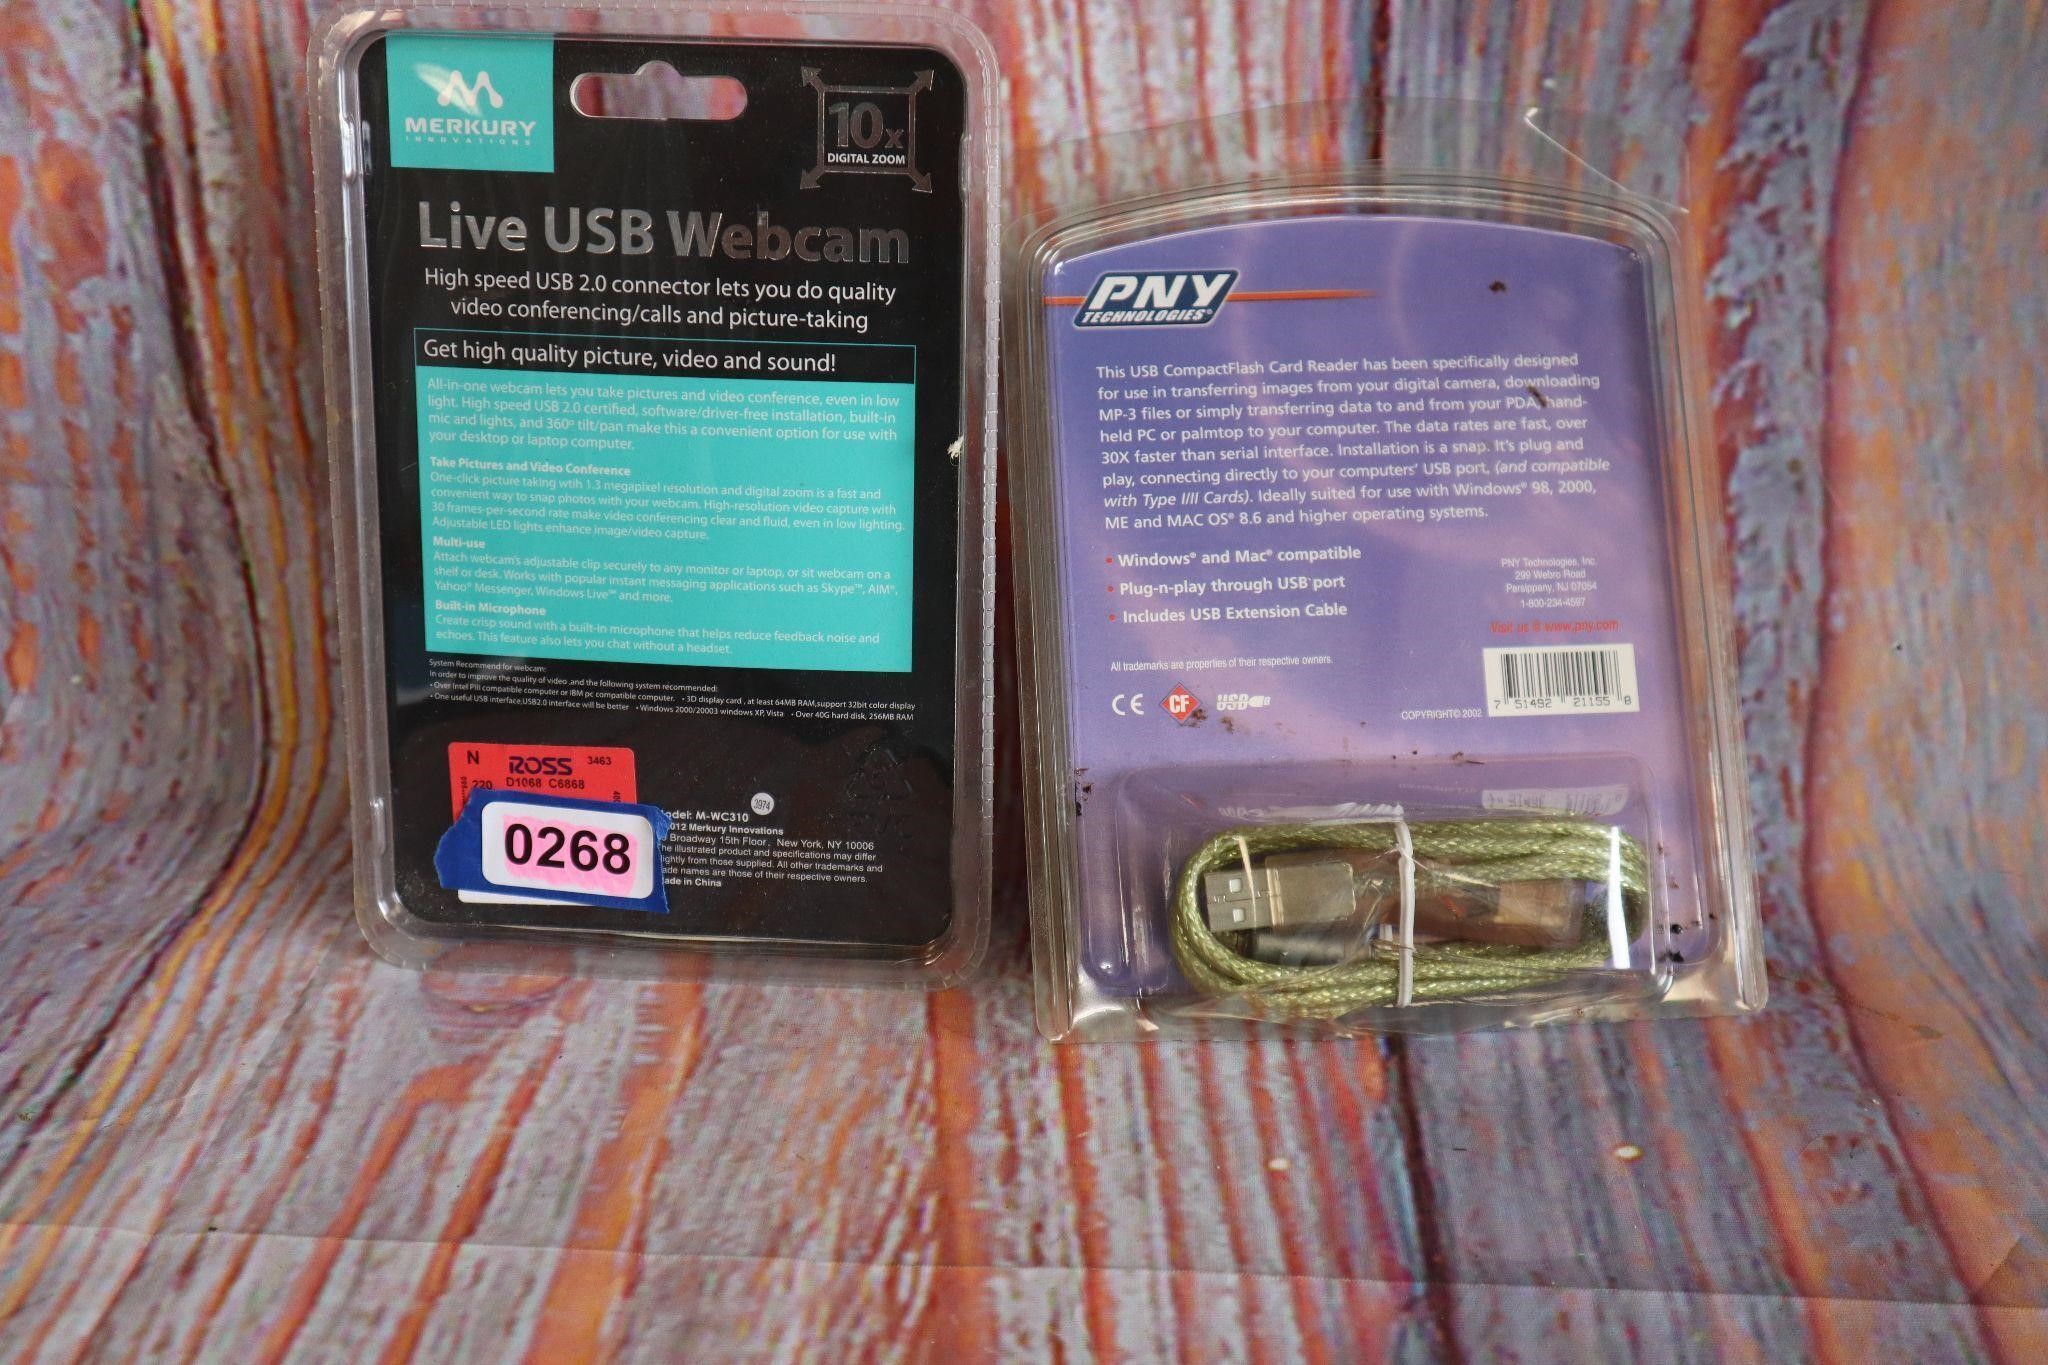 Merkury WebCam and USB Card Reader Both New